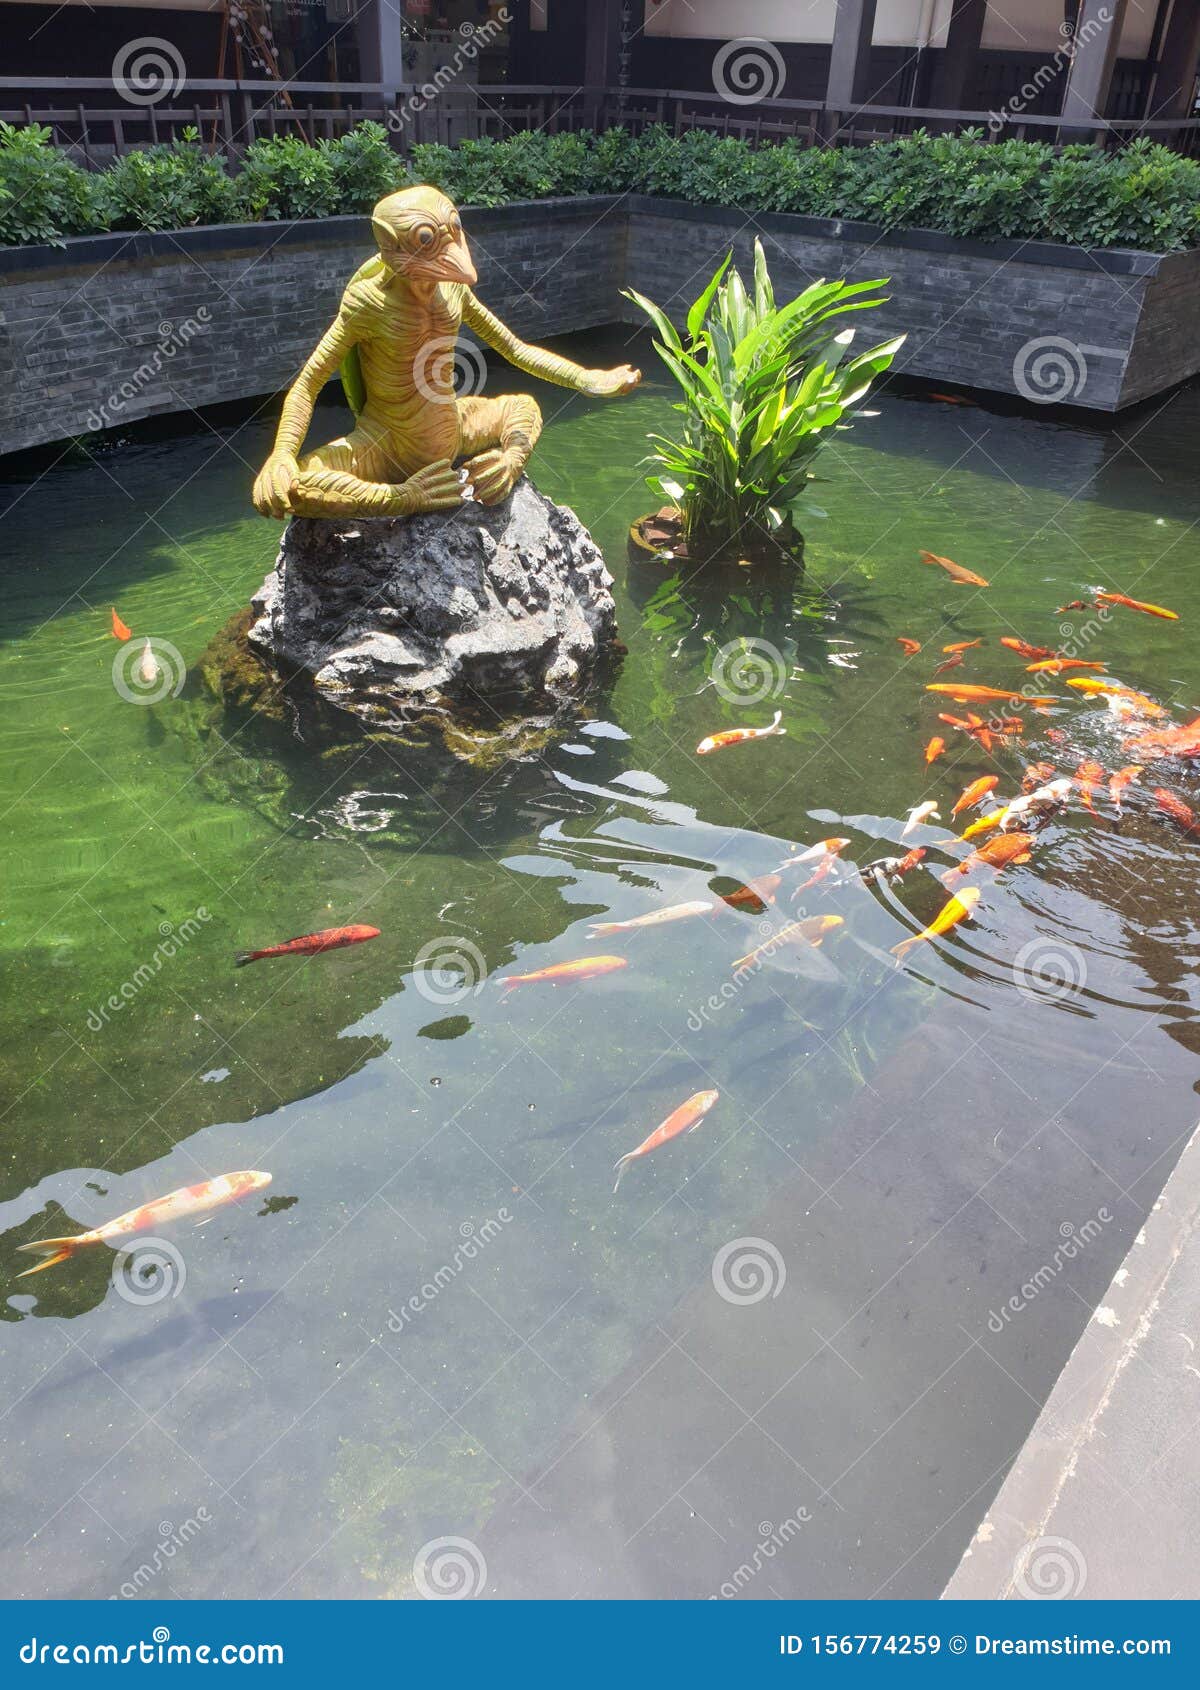 stock image. Image of nature, water, kappa, fish - 156774259